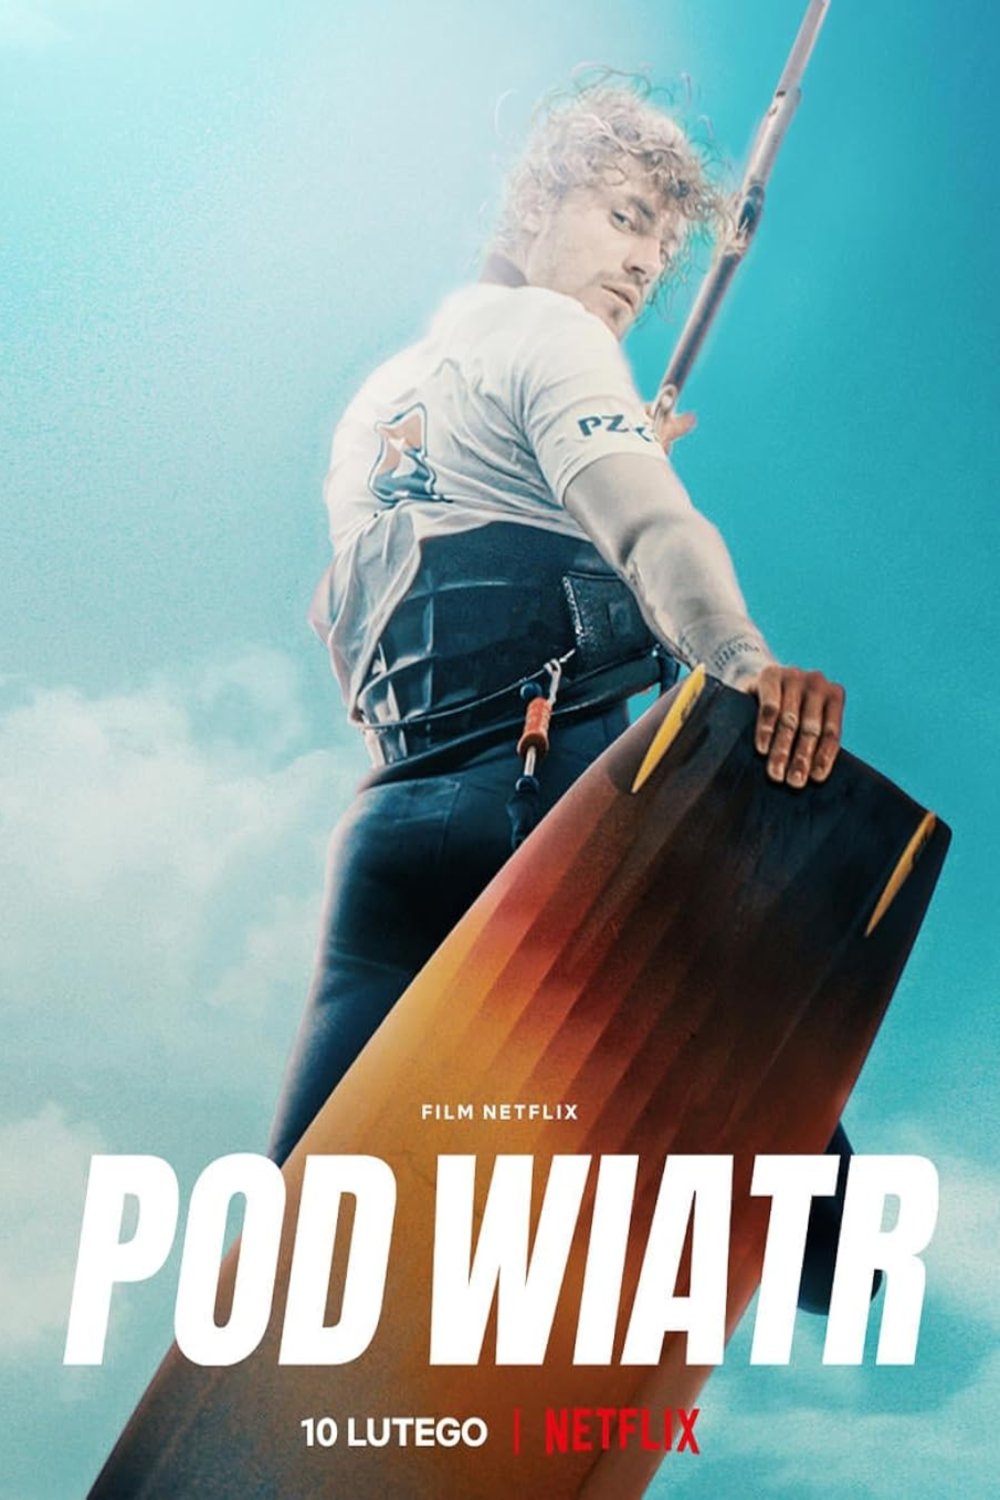 Polish poster of the movie Pod wiatr